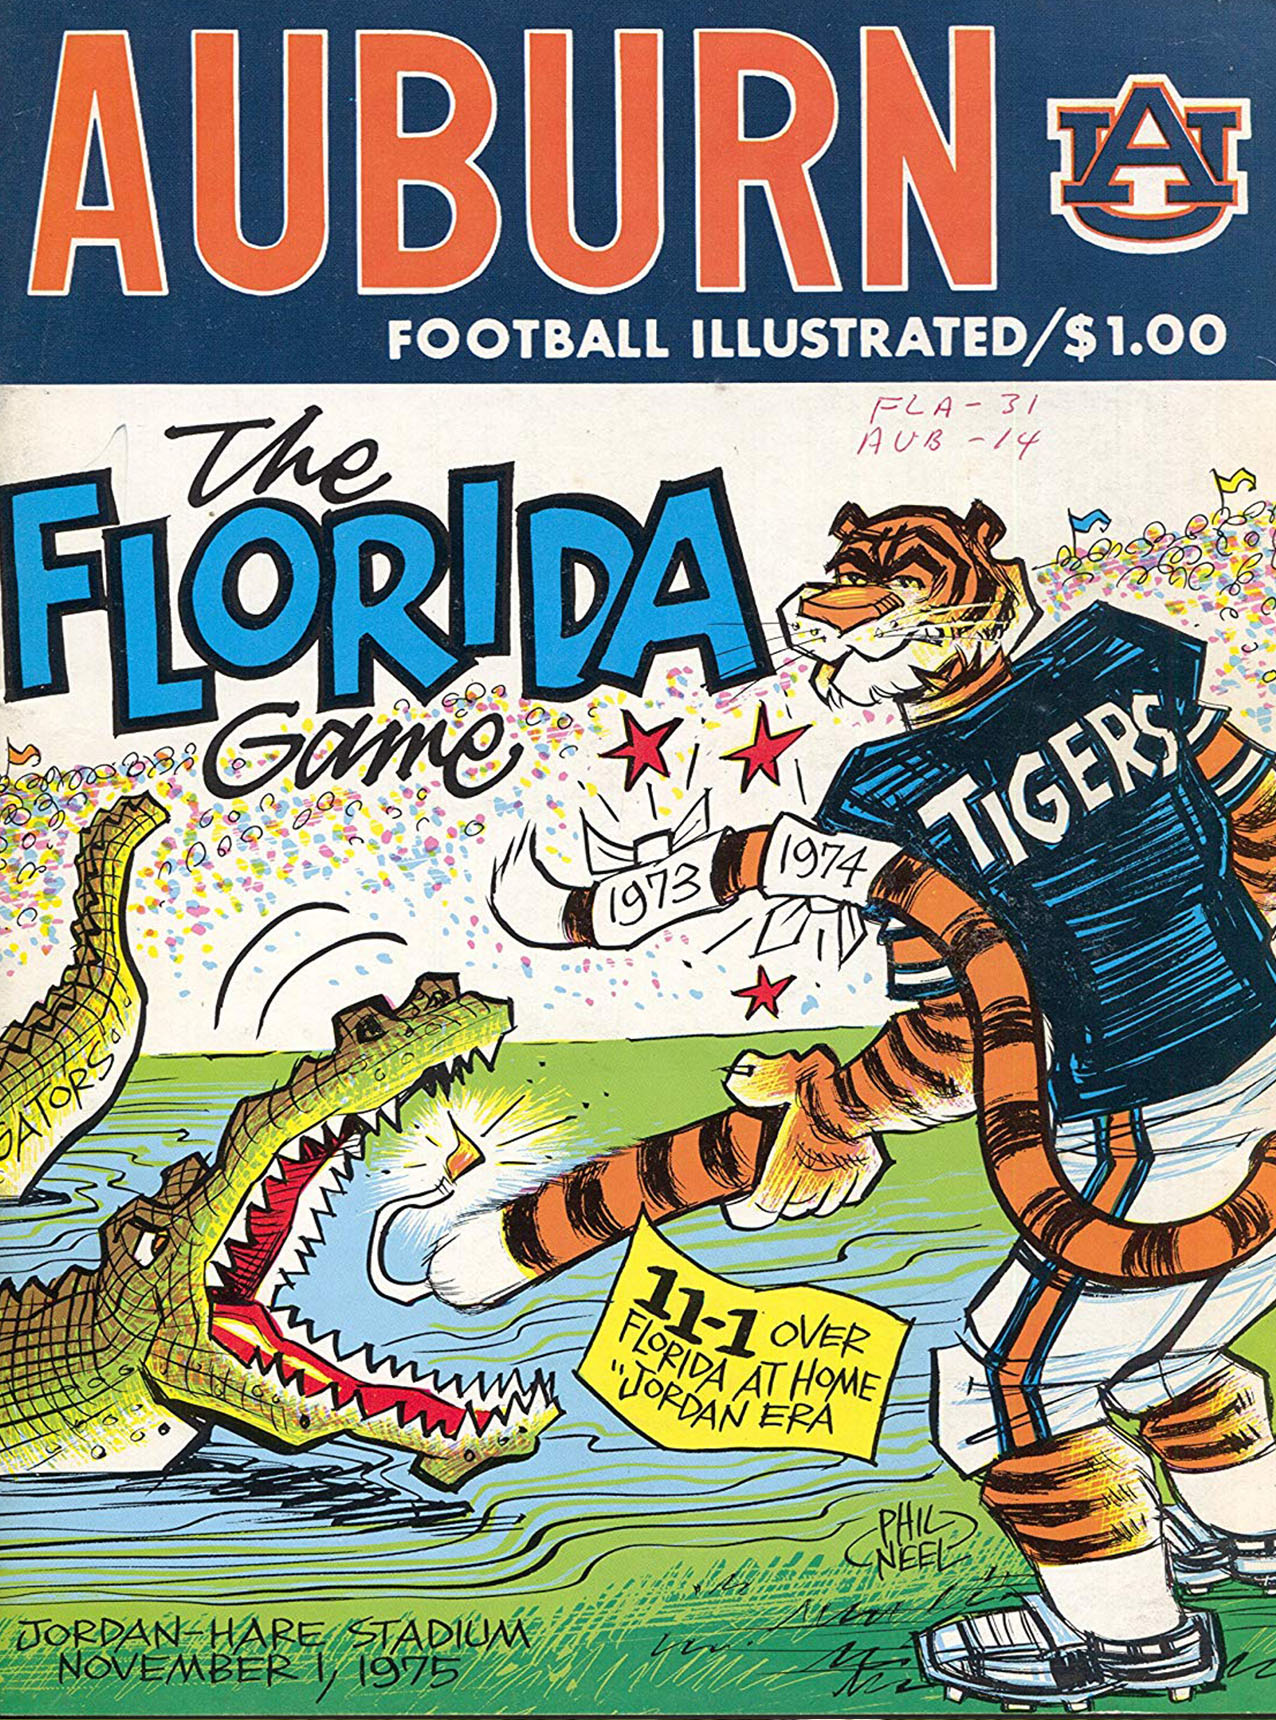 Auburn vs. Florida football program cover